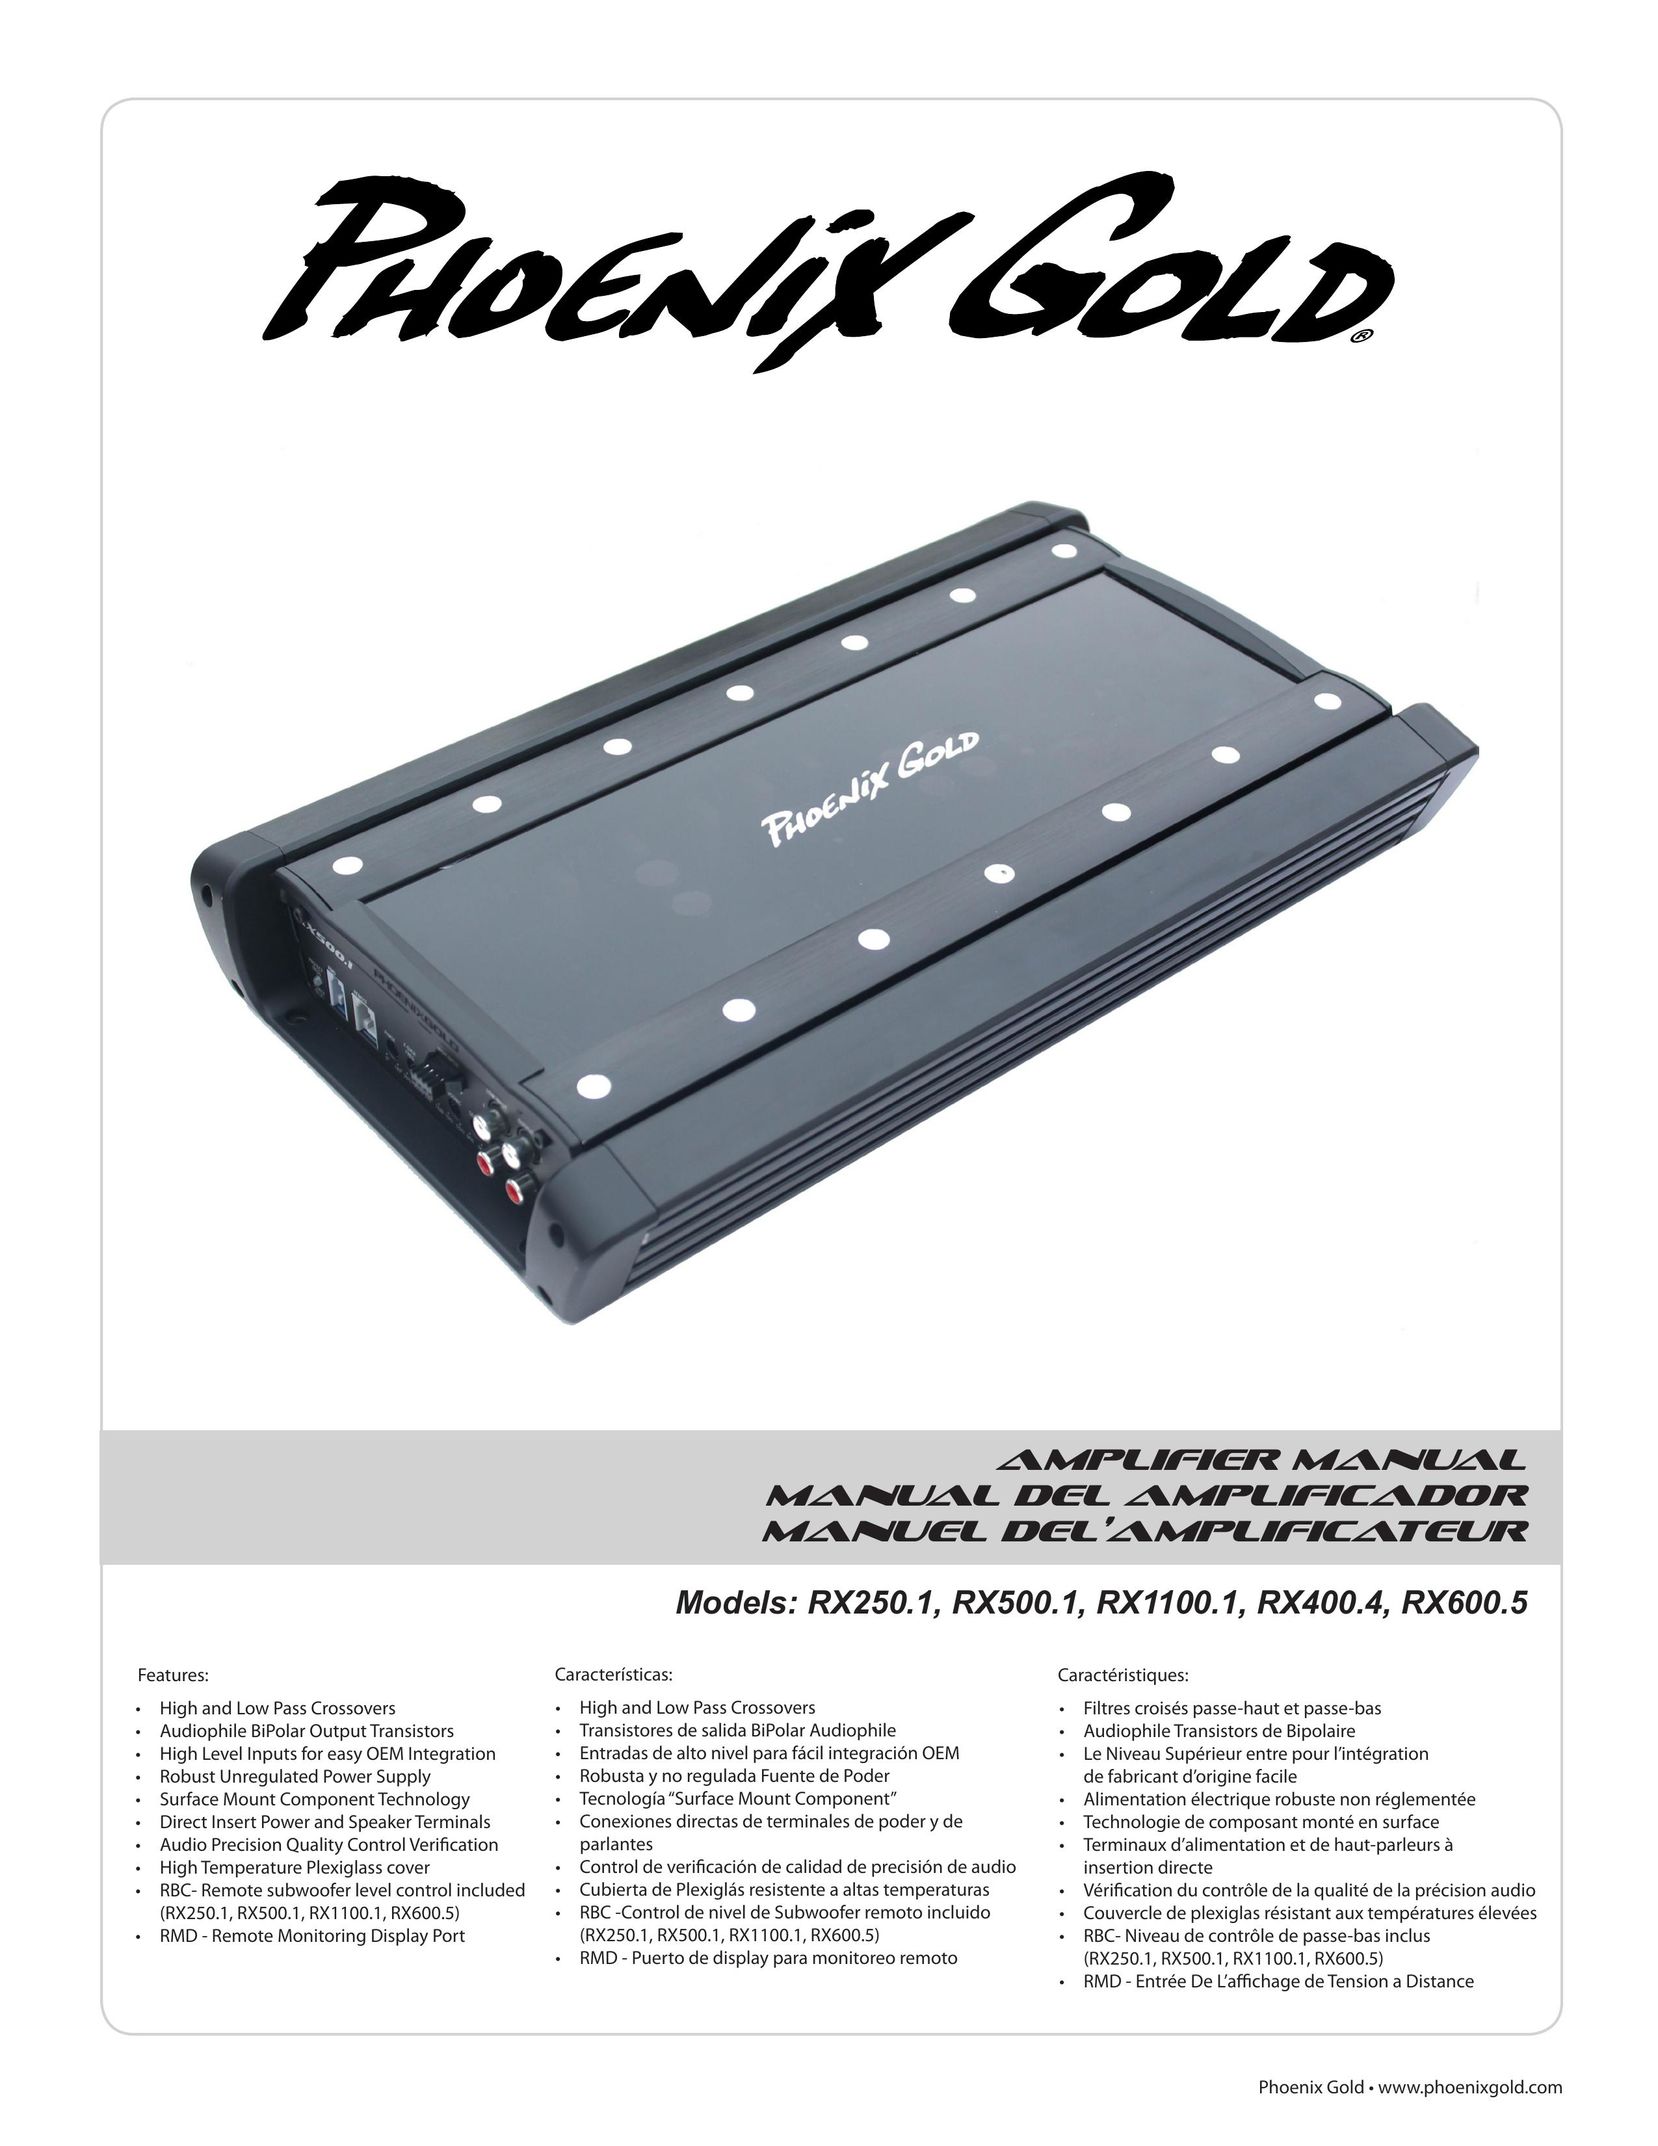 Phoenix Gold RX400.4 Car Amplifier User Manual